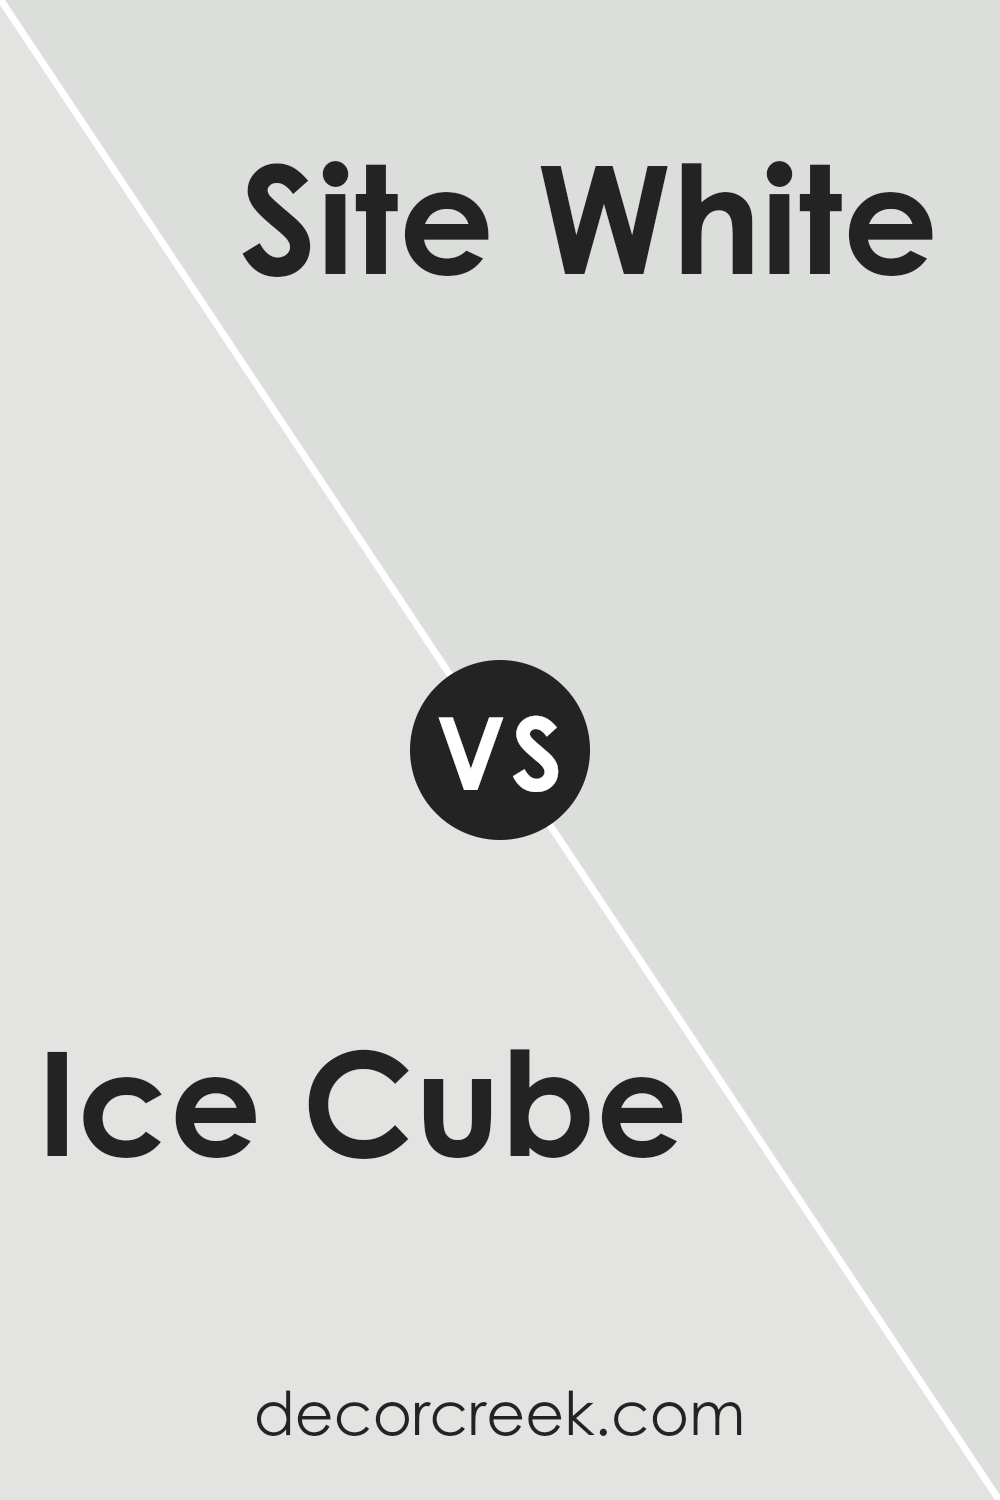 ice_cube_sw_6252_vs_site_white_sw_7070